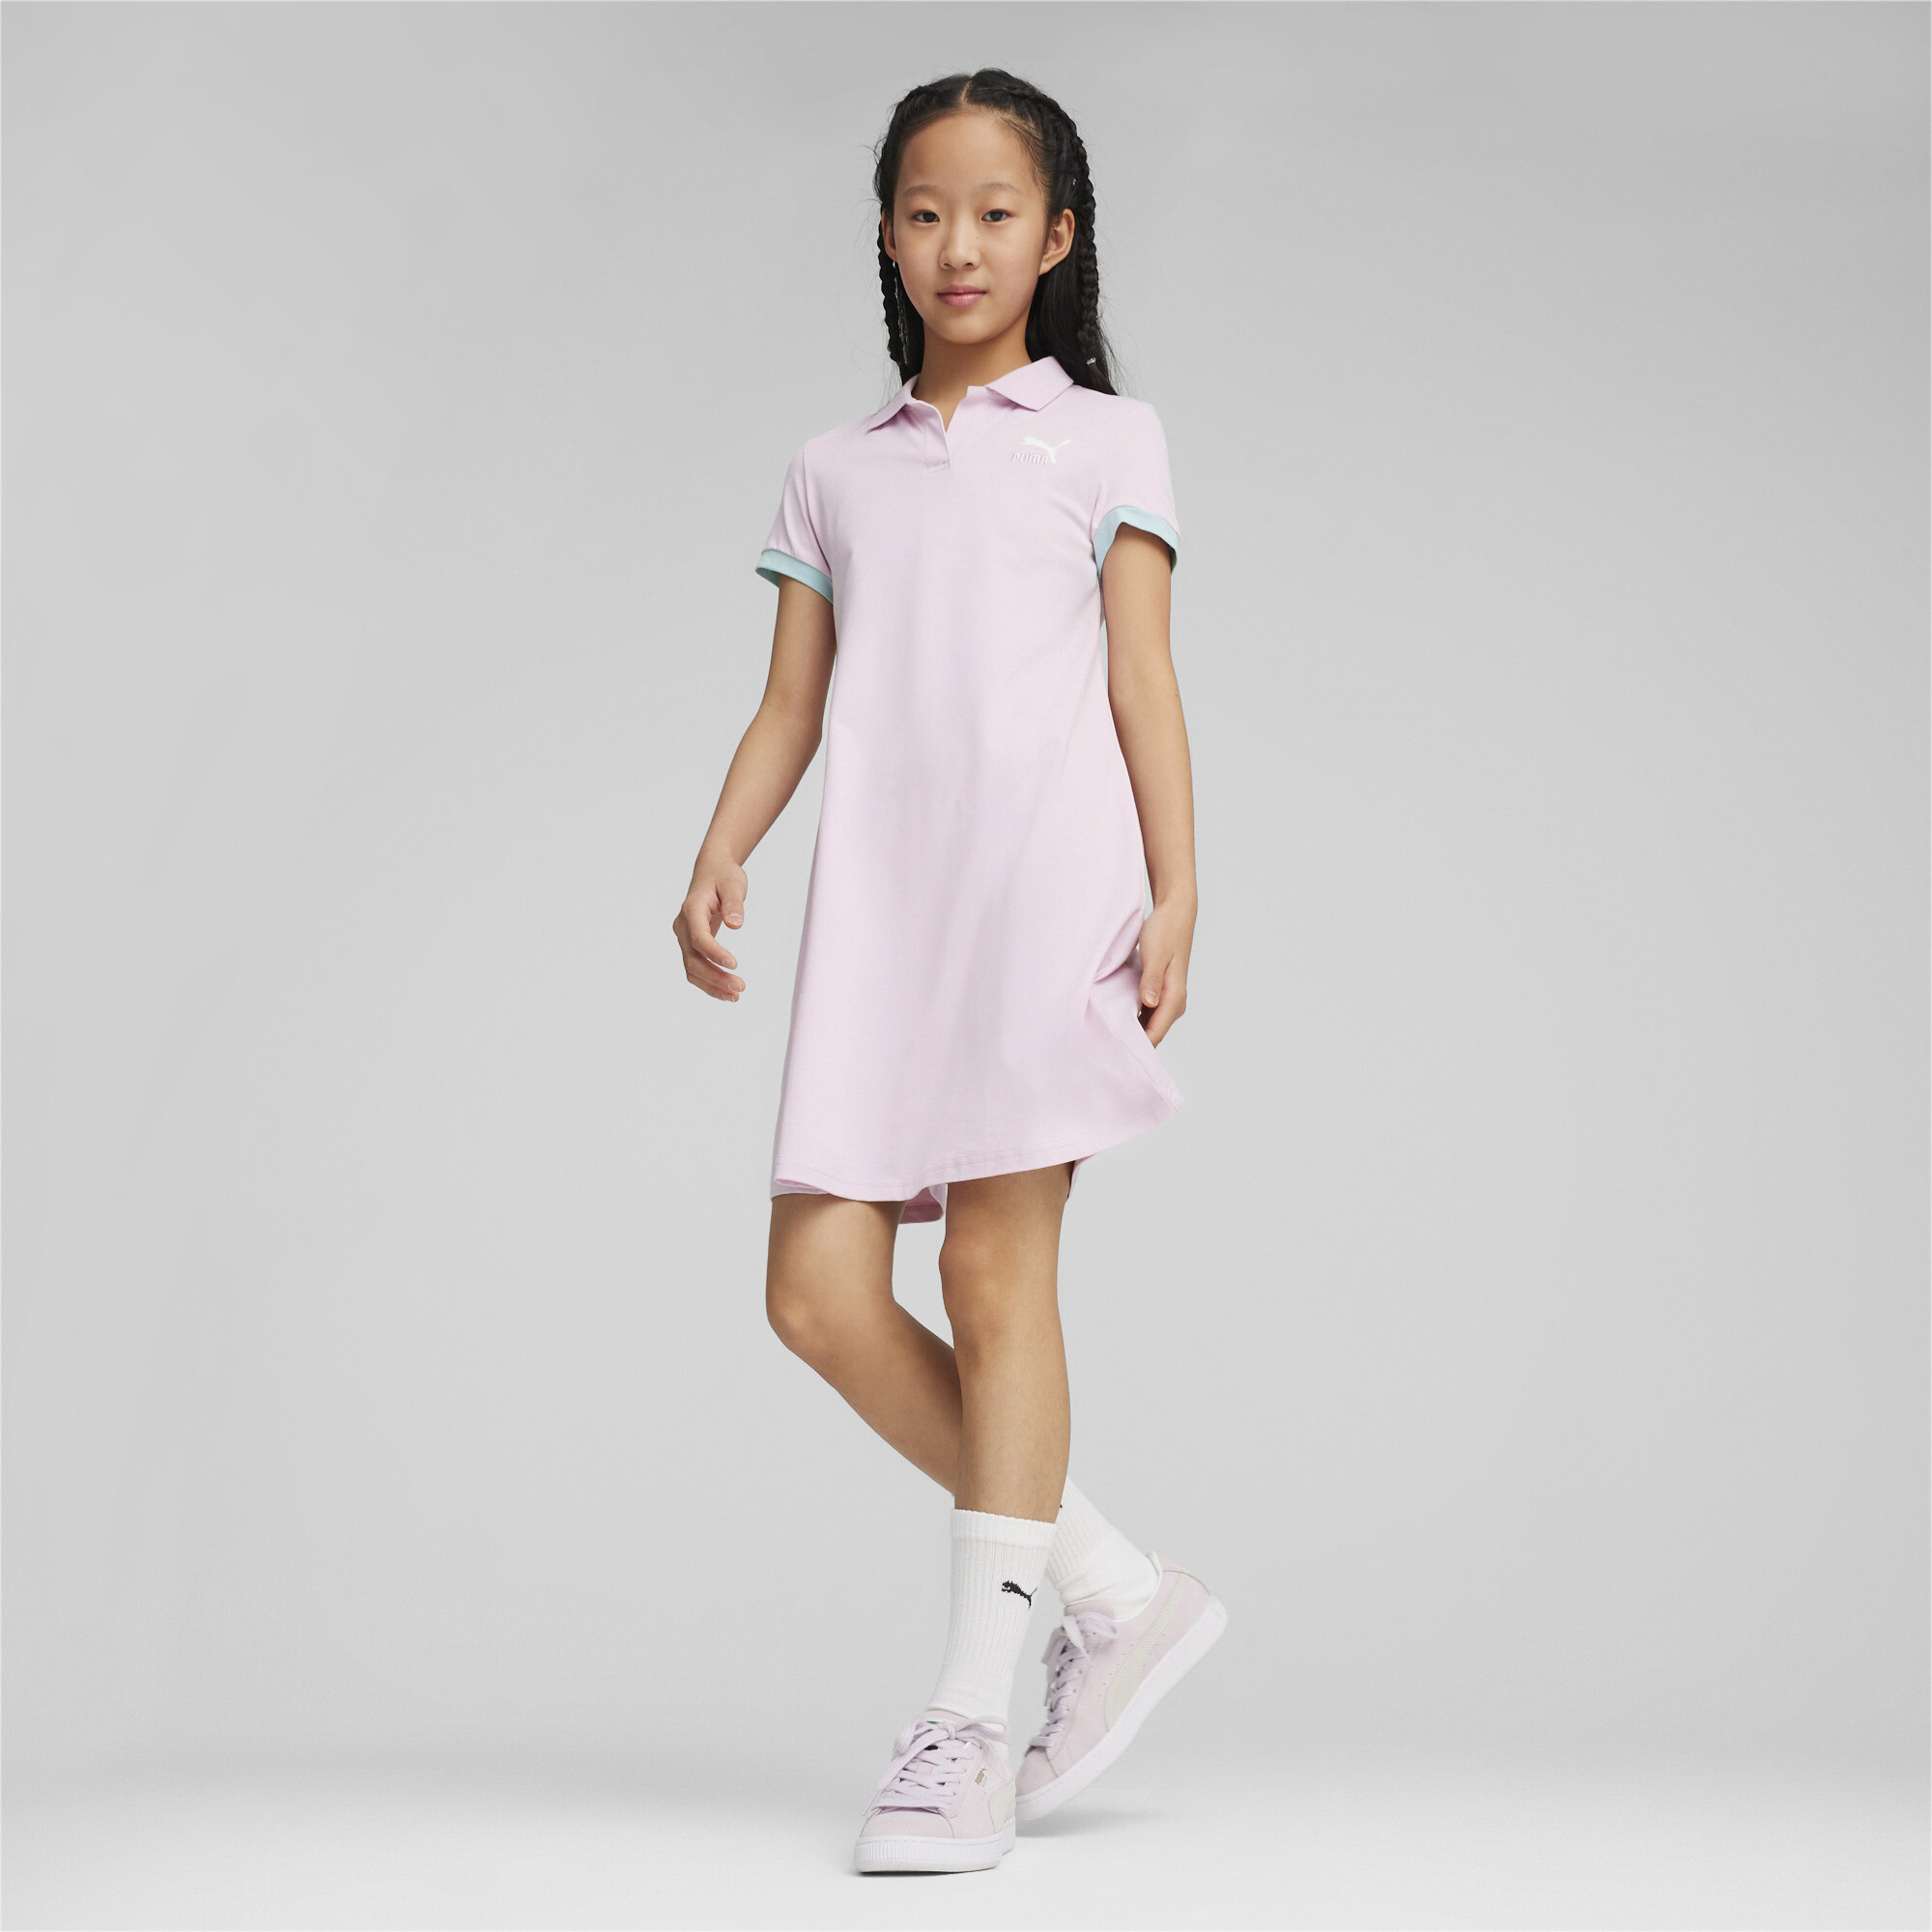 PUMA CLASSICS Match Point Dress In Purple, Size 9-10 Youth